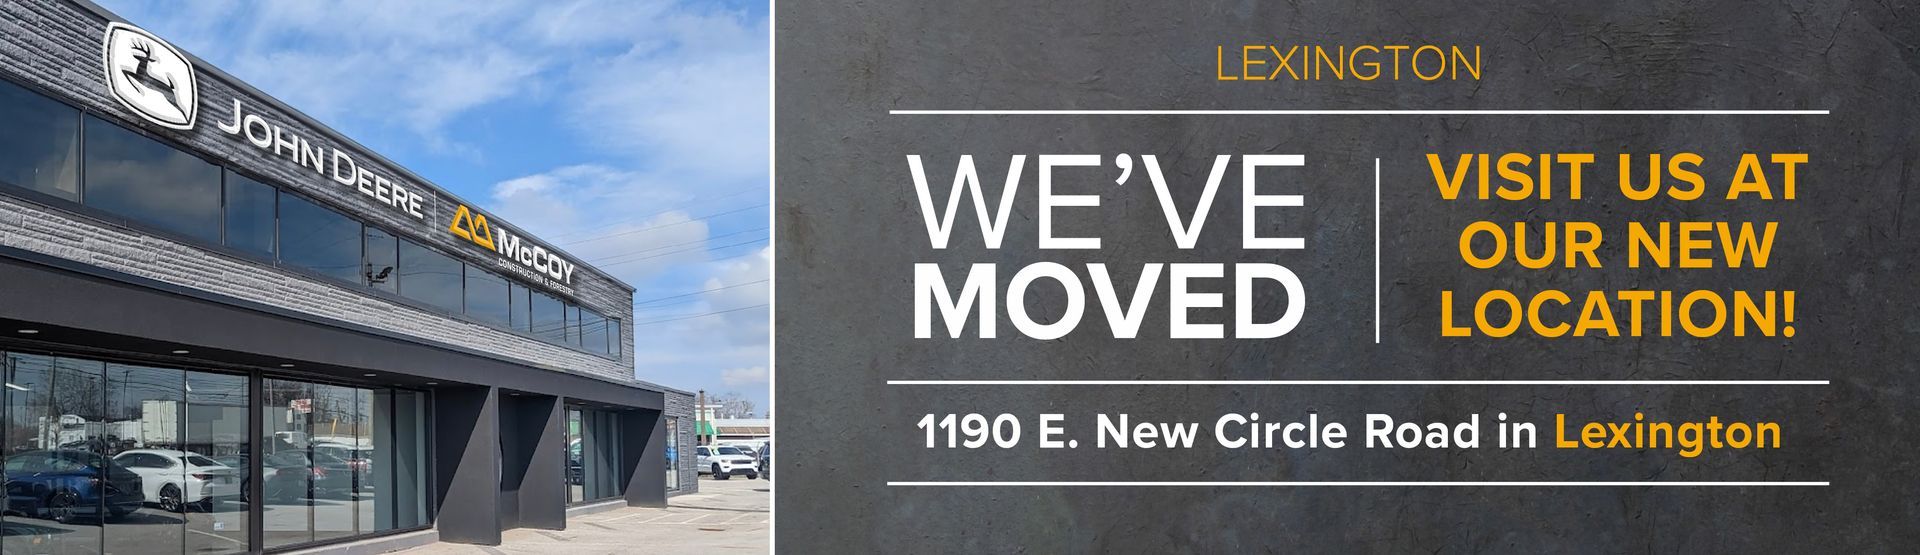 Lexington-We've Moved